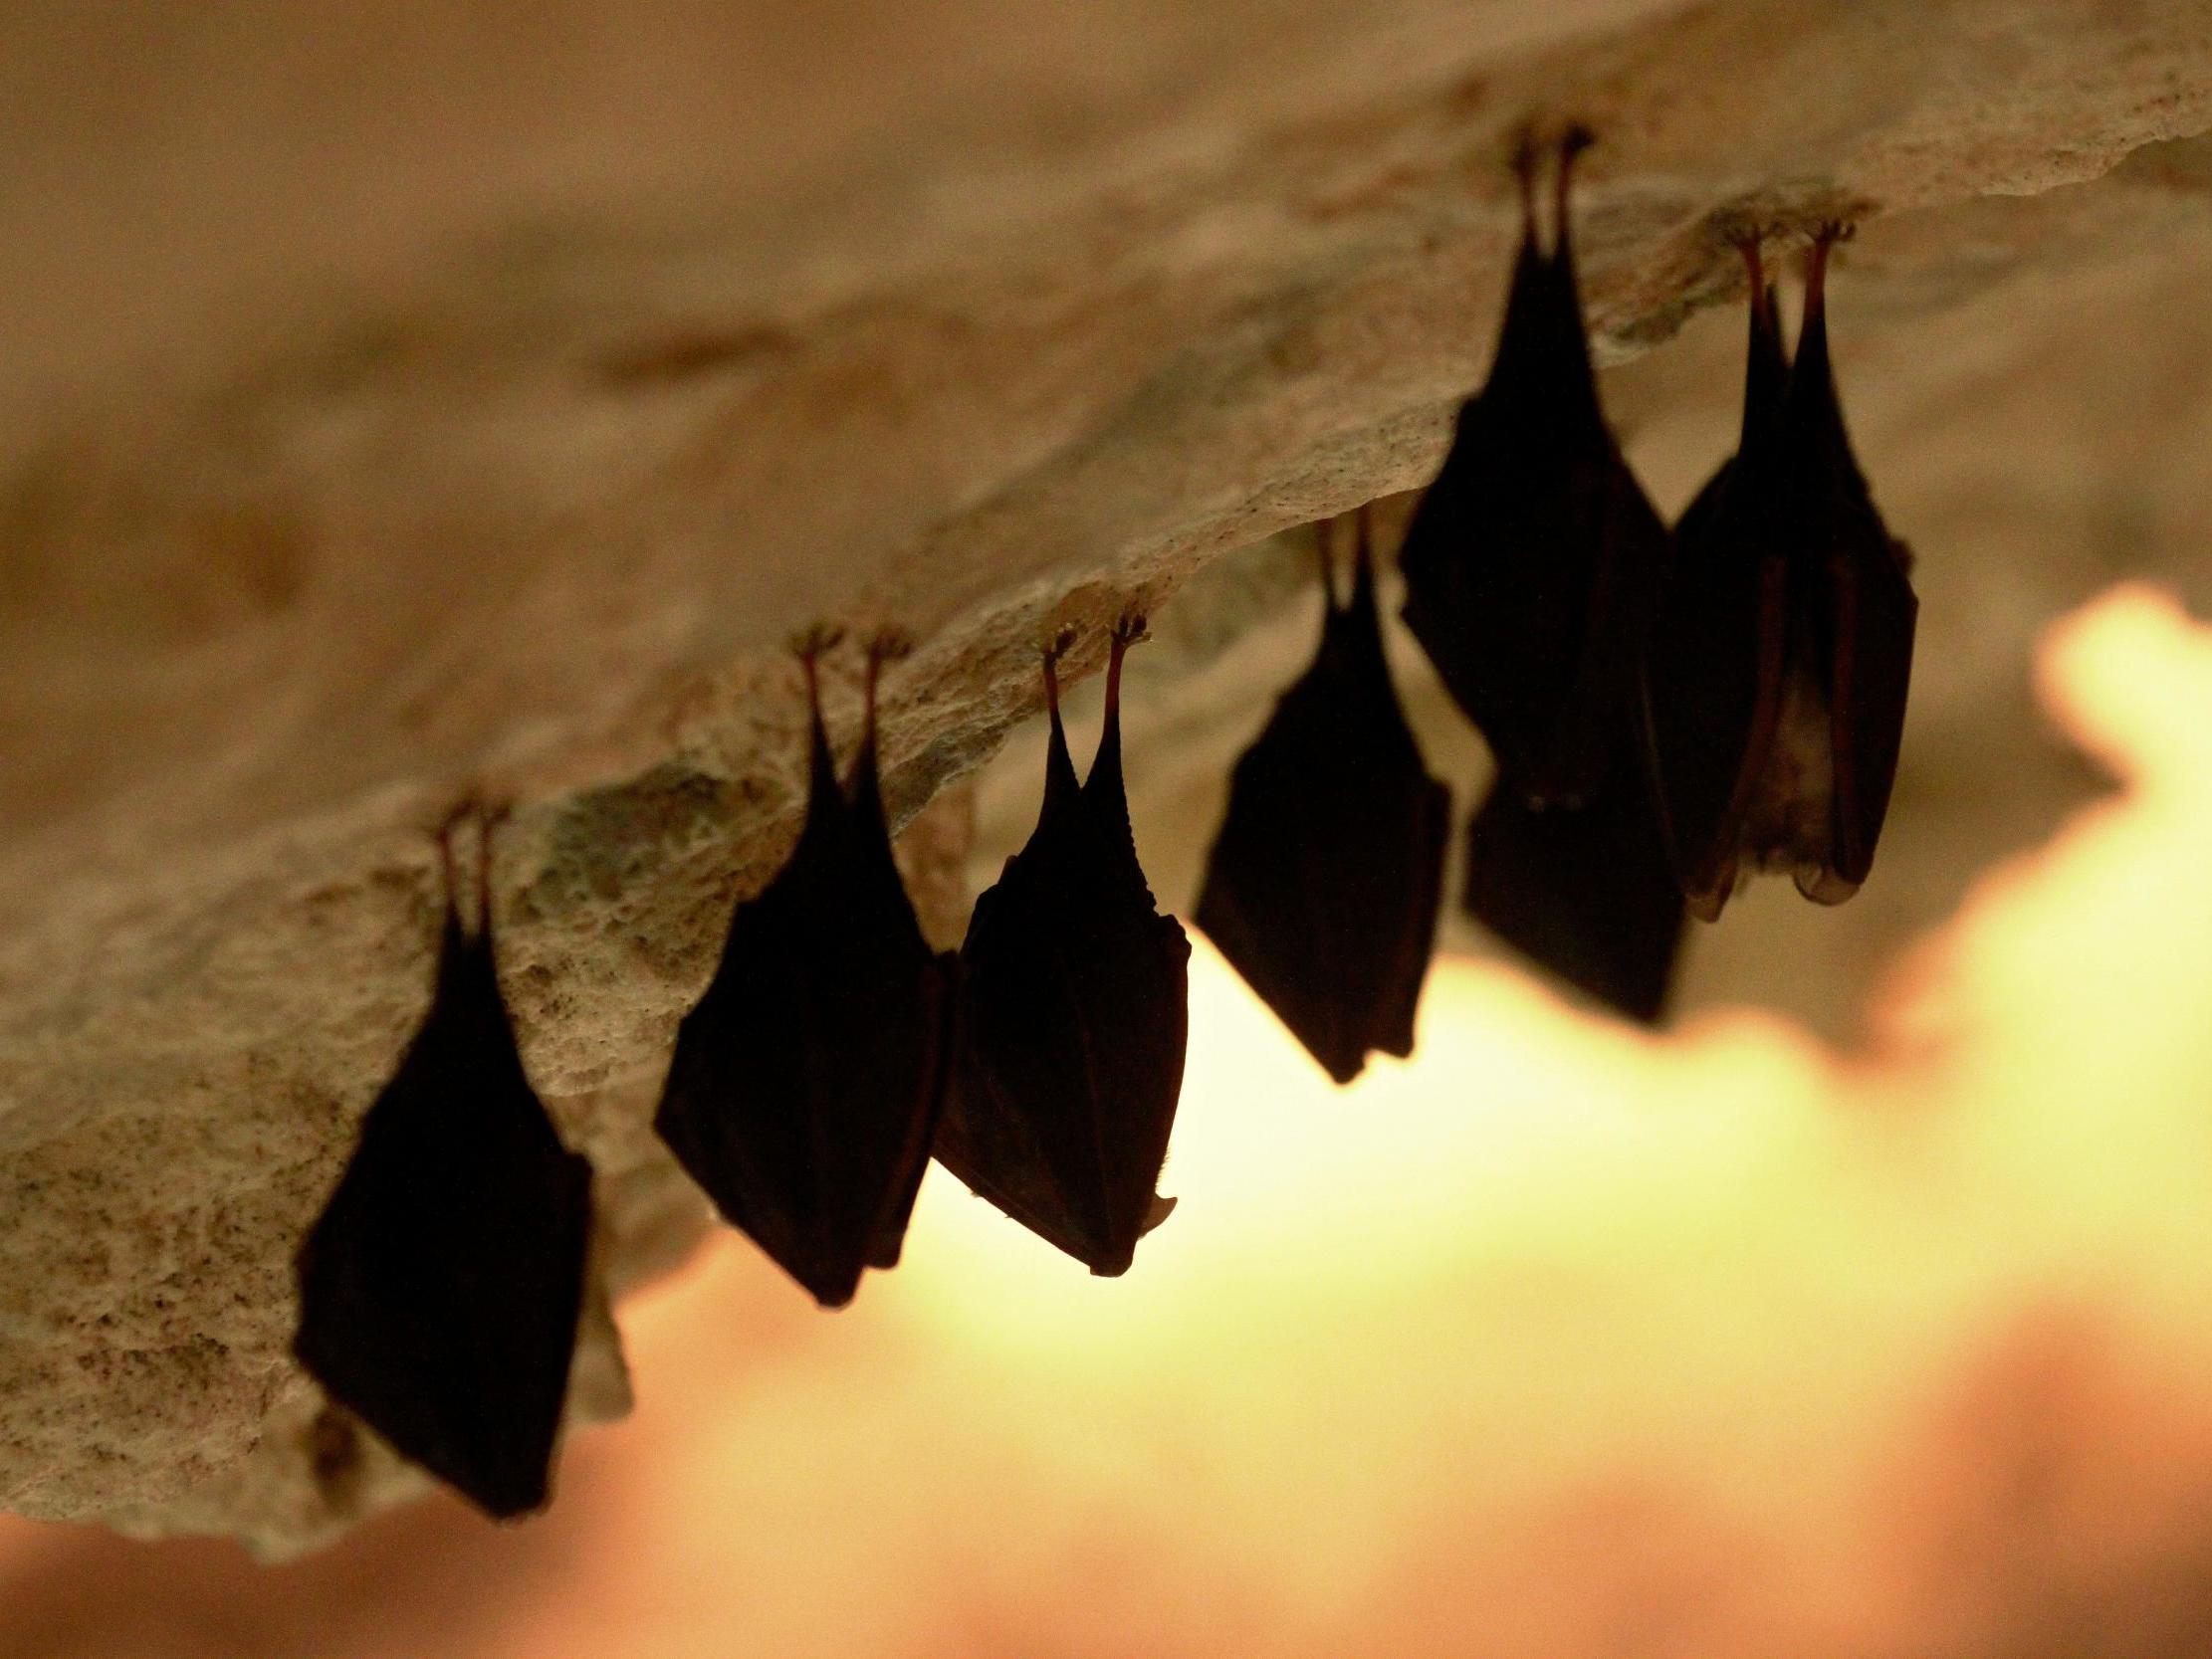 Researchers think coronavirus jumped from bats to humans via an intermediate animal